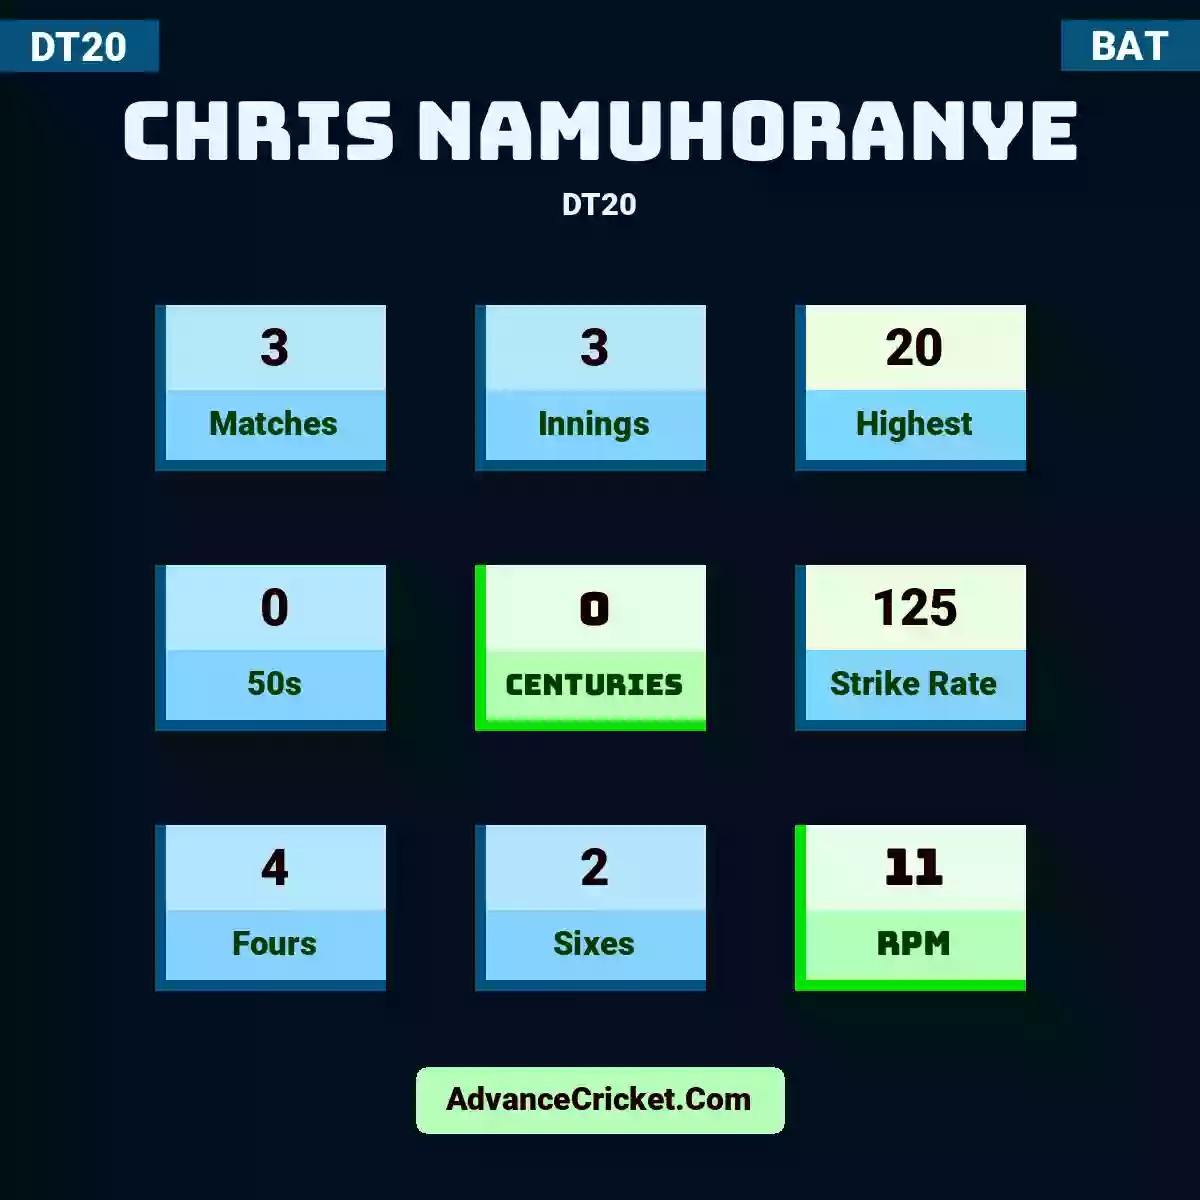 Chris Namuhoranye DT20 , Chris Namuhoranye played 3 matches, scored 20 runs as highest, 0 half-centuries, and 0 centuries, with a strike rate of 125. C.Namuhoranye hit 4 fours and 2 sixes, with an RPM of 11.